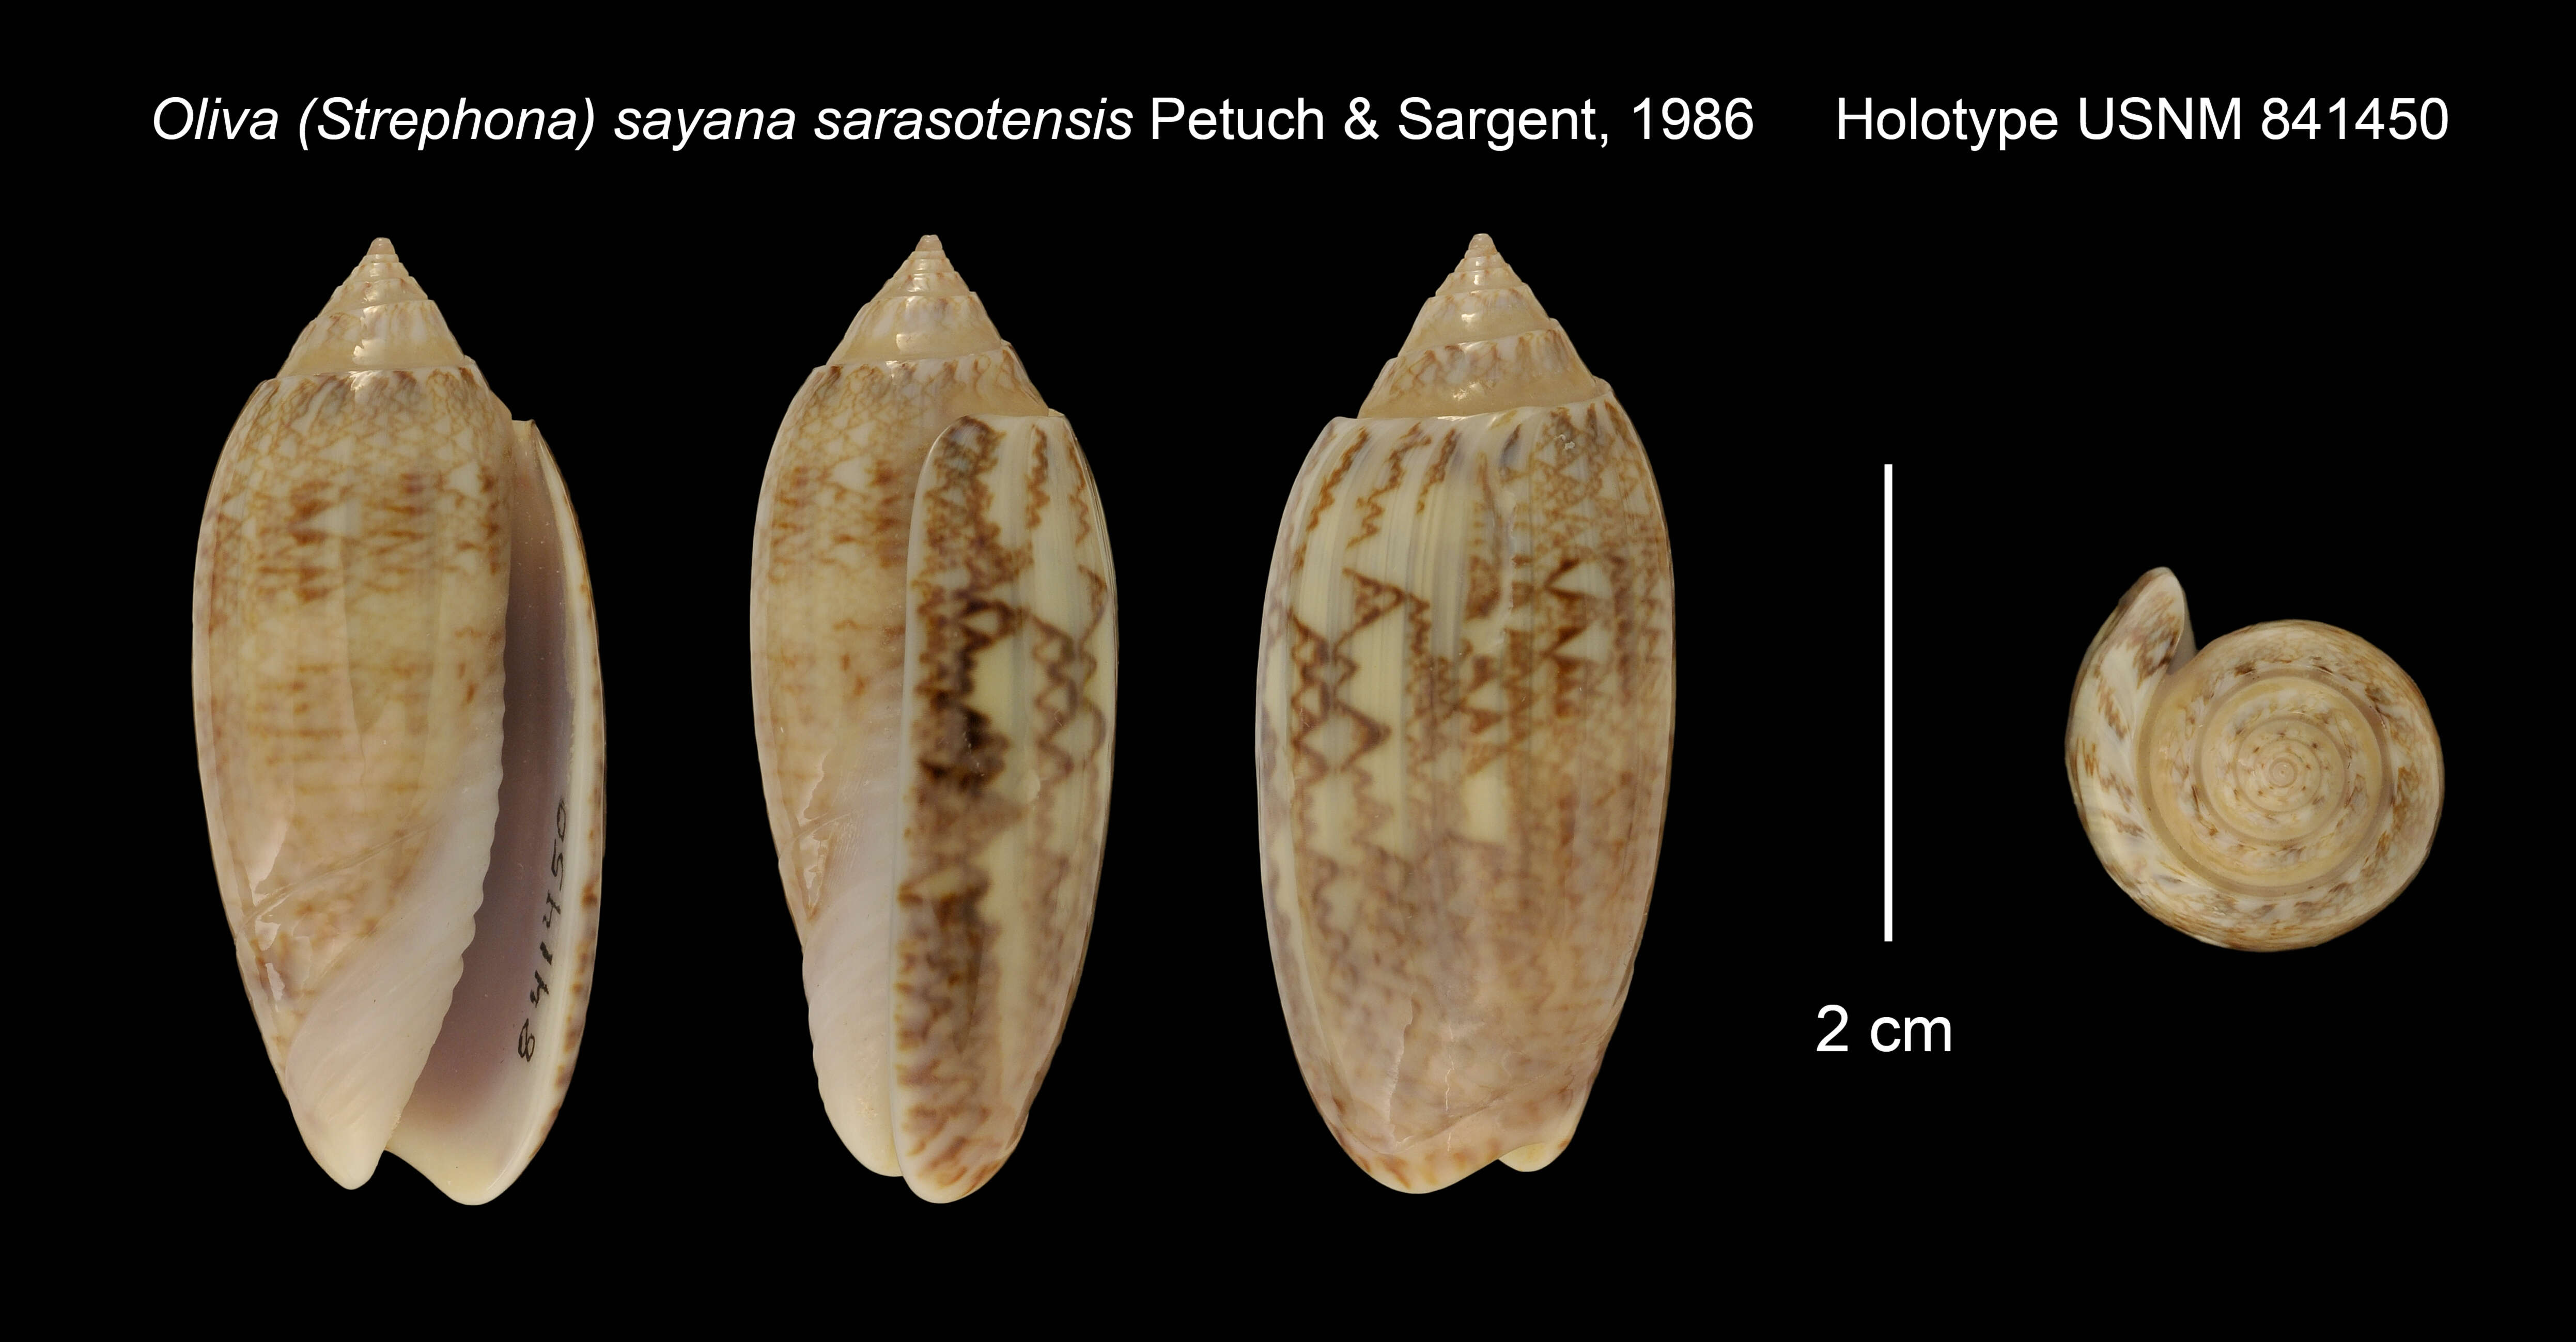 Image of Oliva (Strephona) sayana sarasotensis Petuch & Sargent